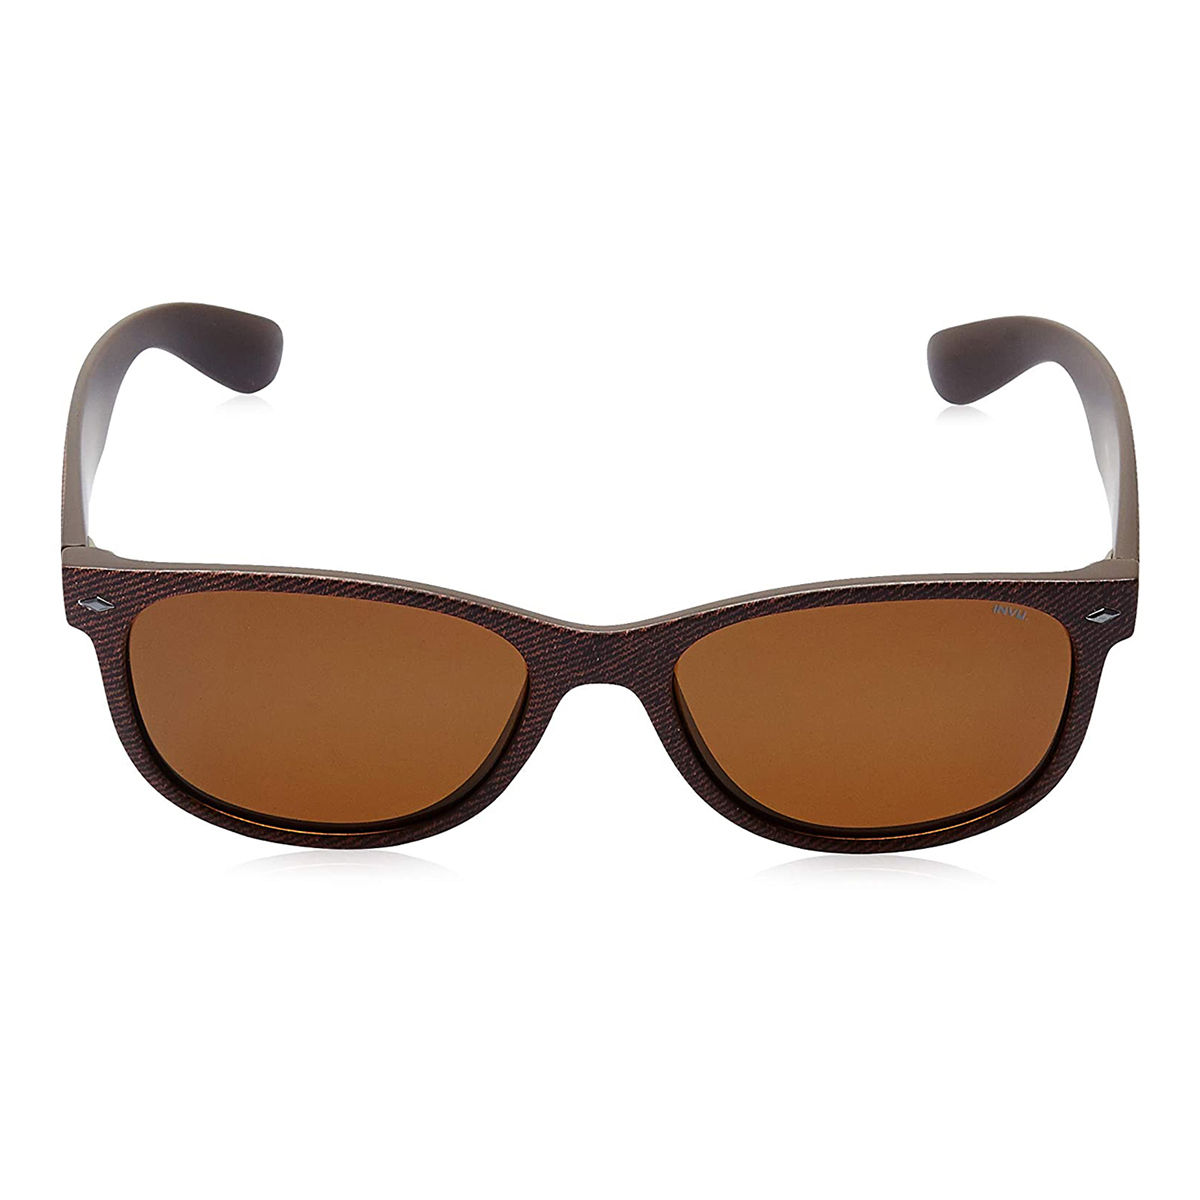 Invu Sunglasses Rectangular Sunglass With Brown Lens For Men